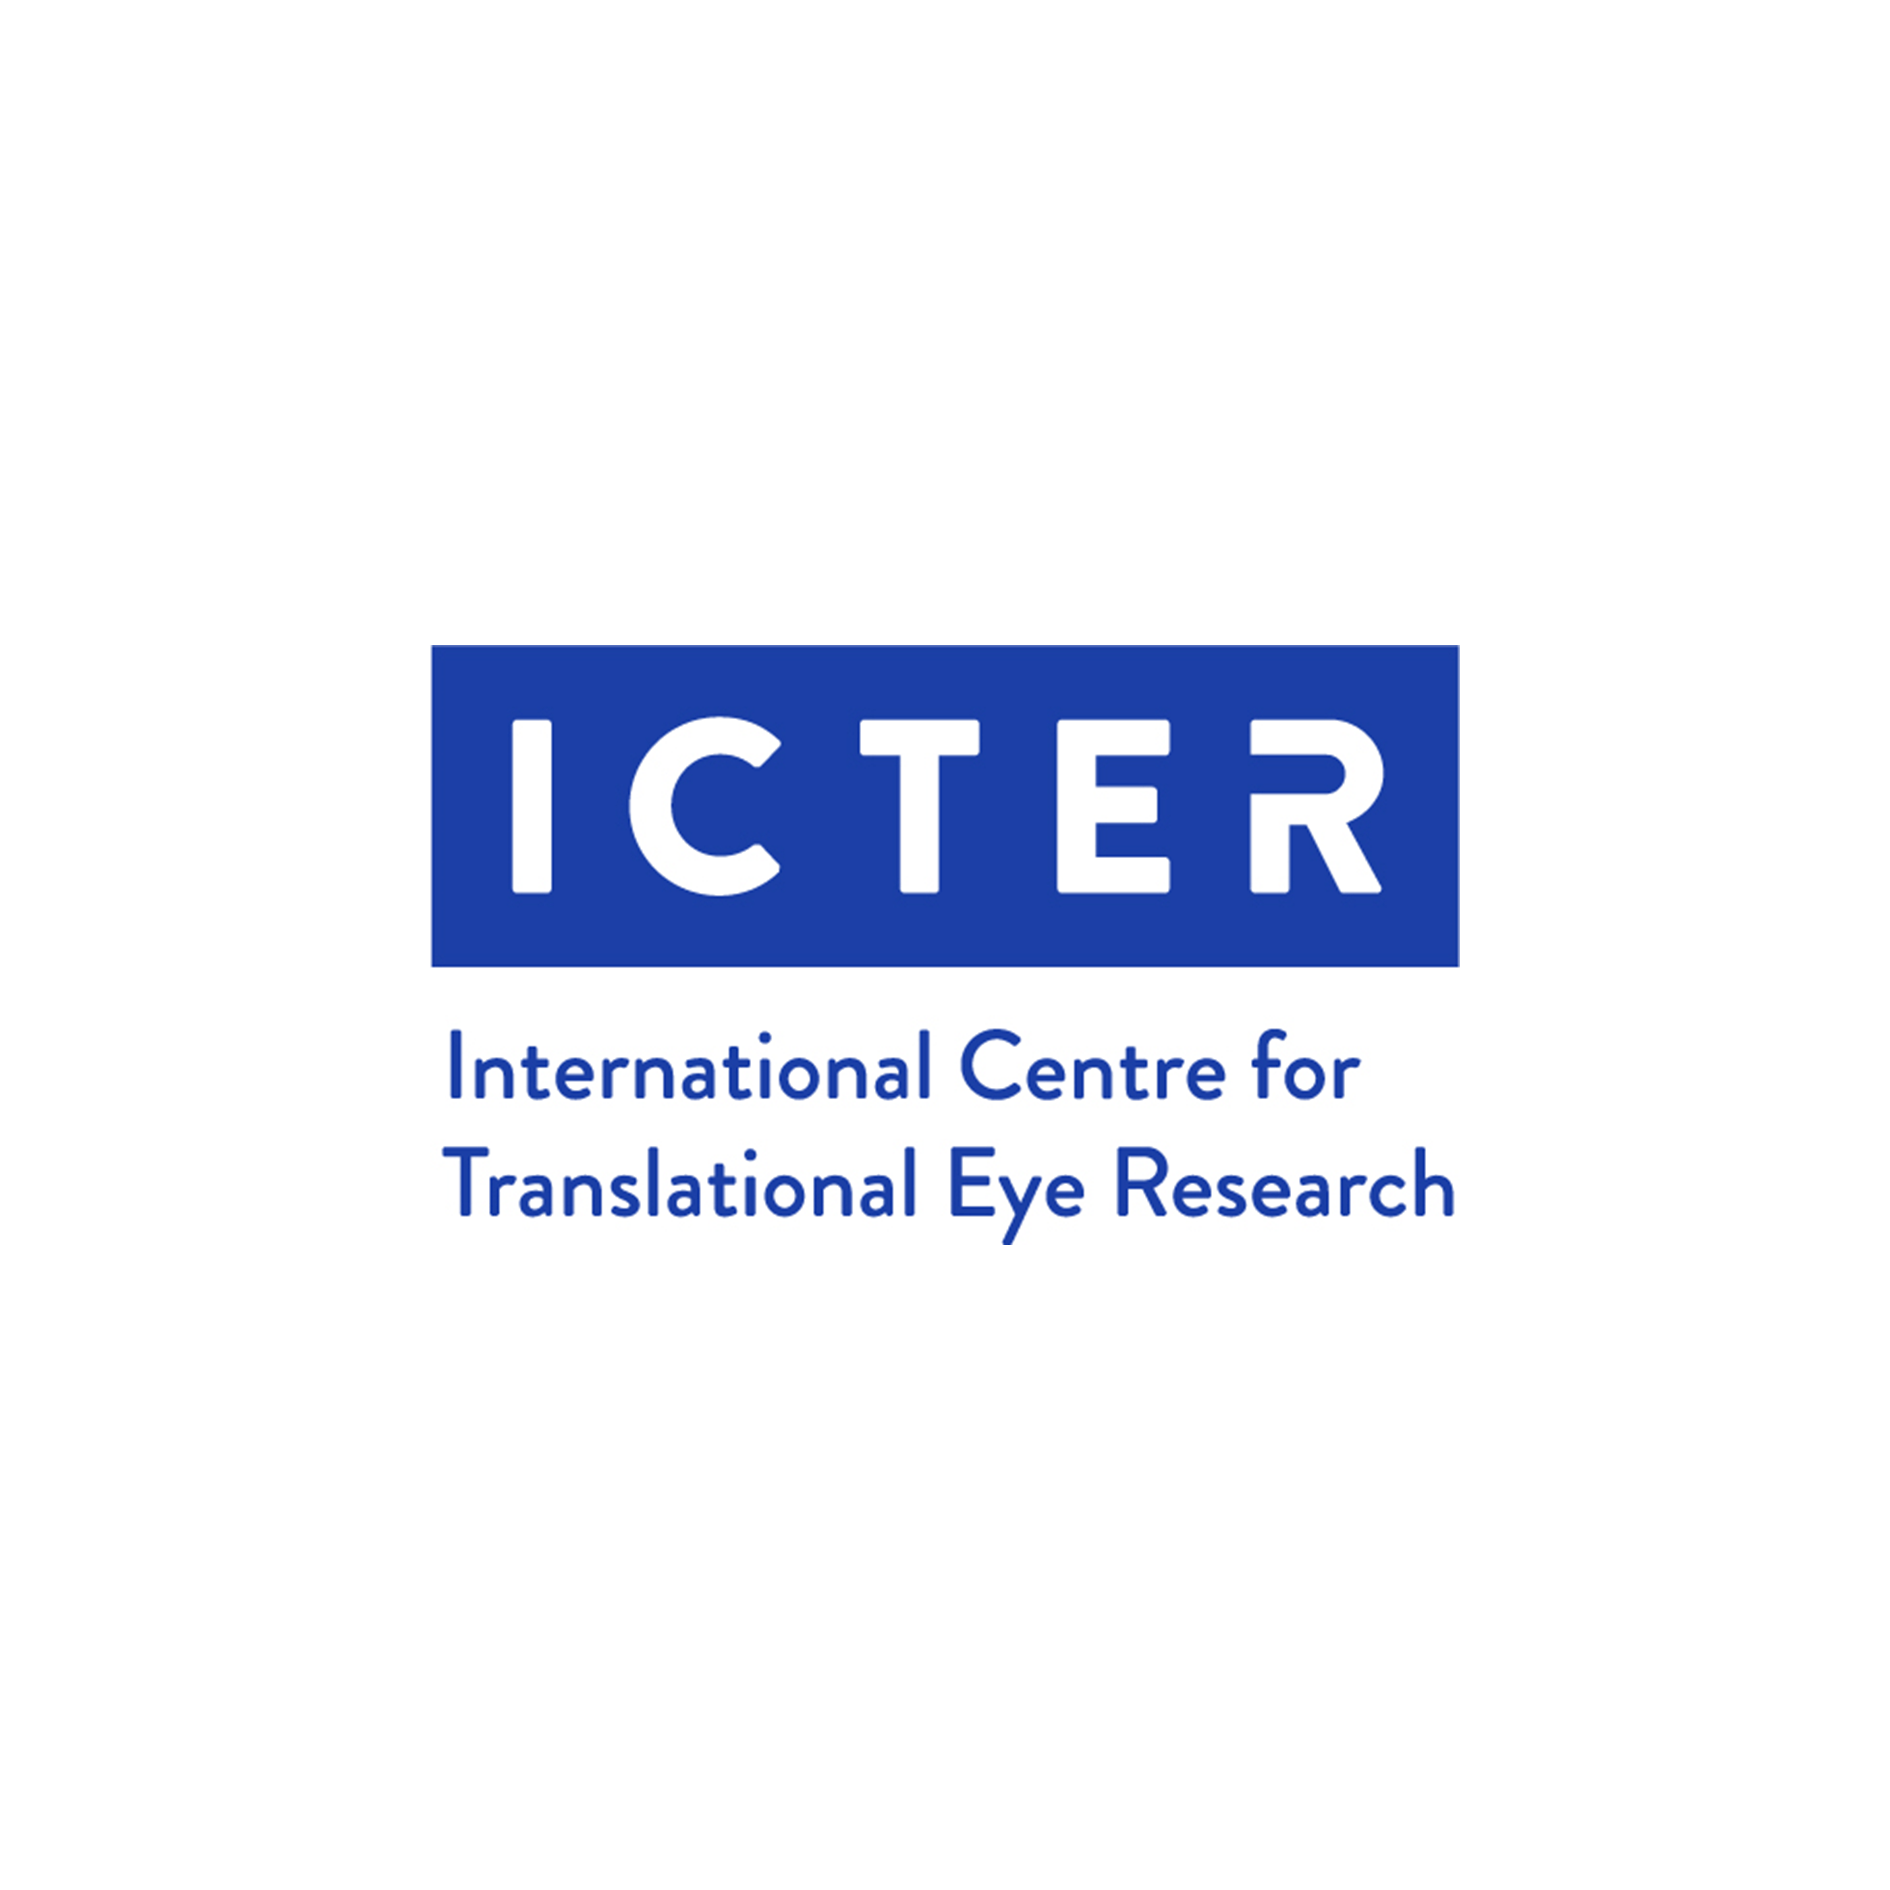 International Centre for Translational Eye Research - ICTER